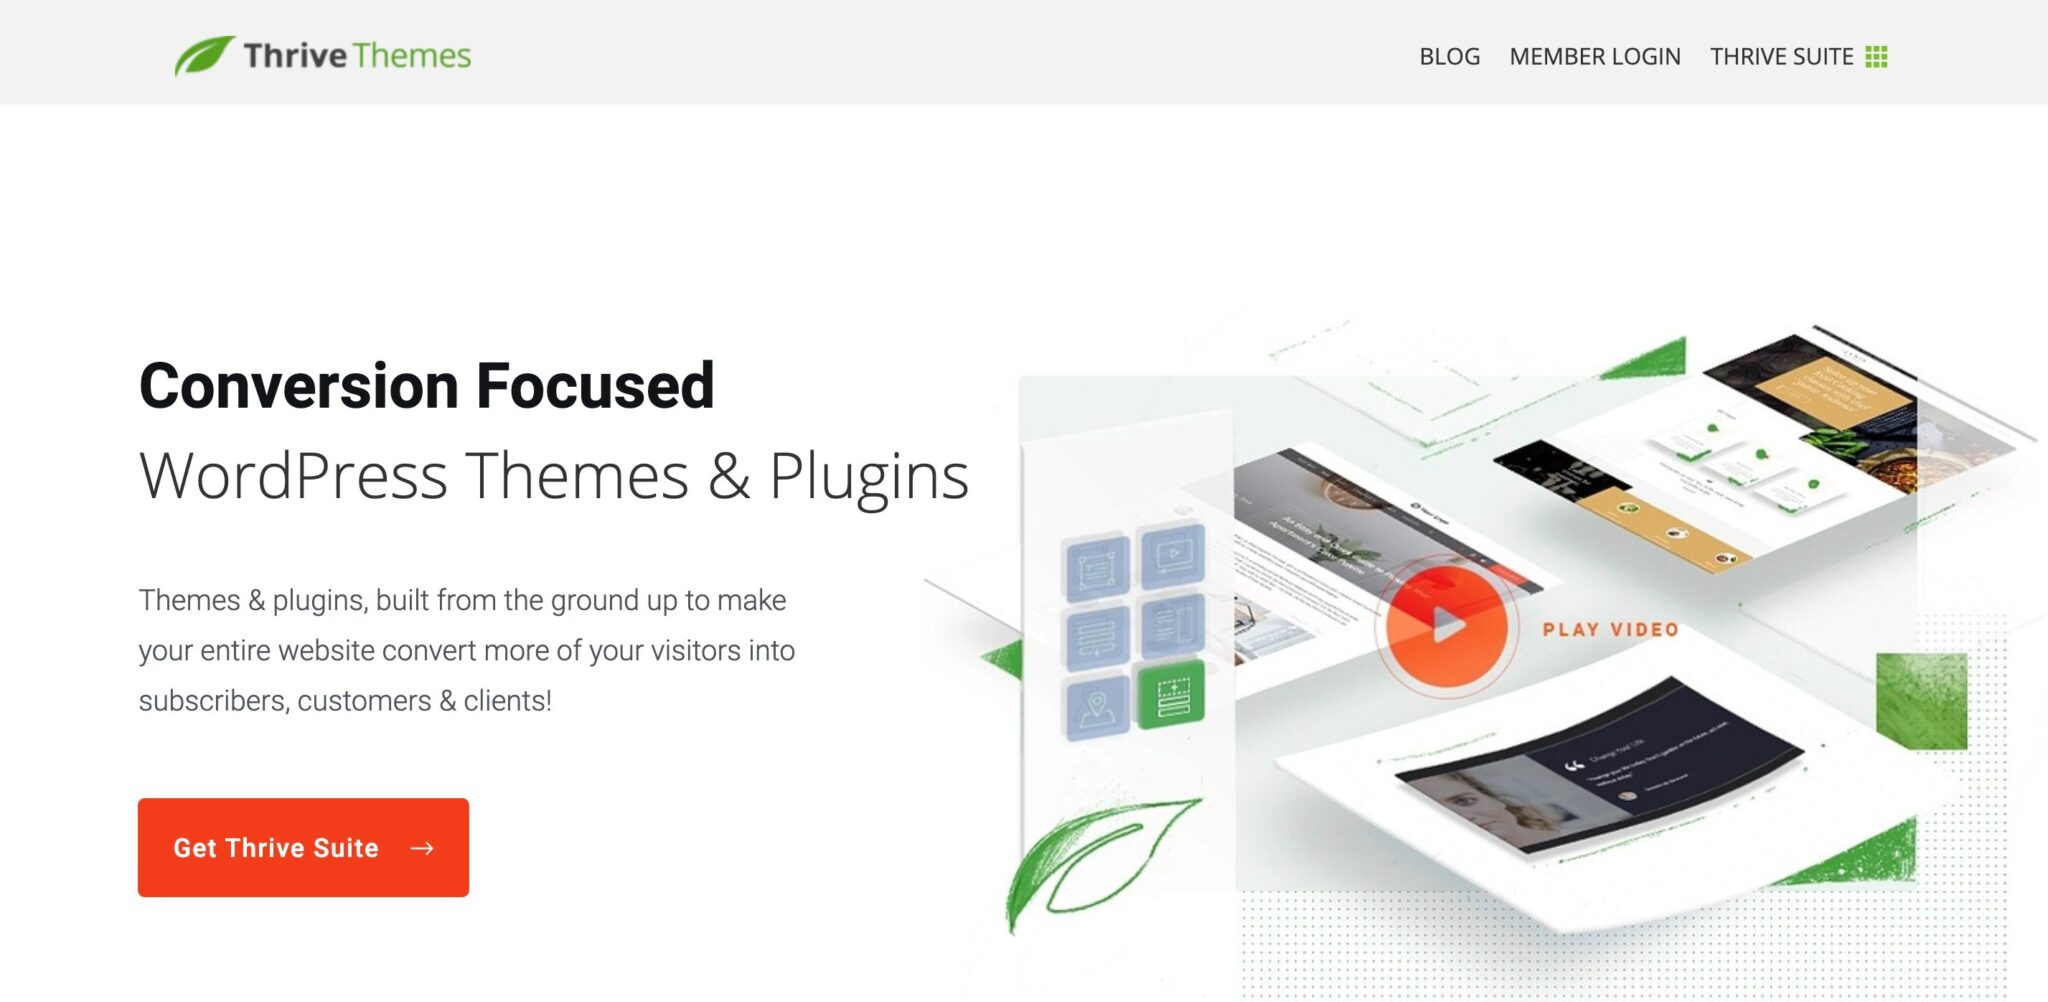 thrive themes homepage screenshot